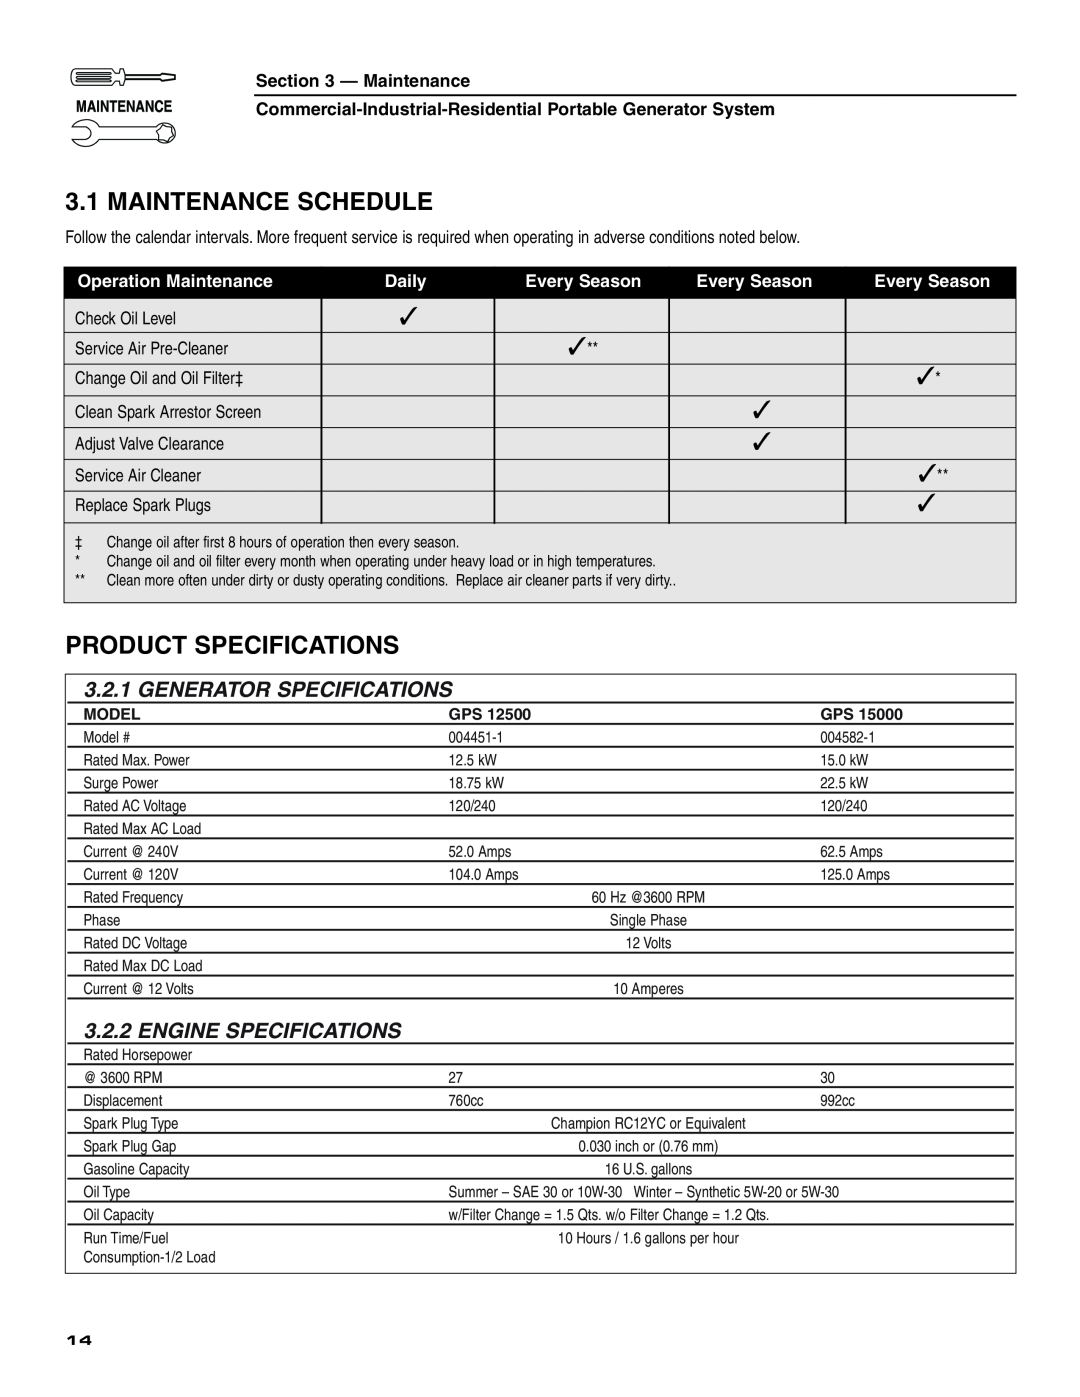 Generac 004451 ,004582 Maintenance Schedule, Product Specifications, Generator Specifications, Engine Specifications 